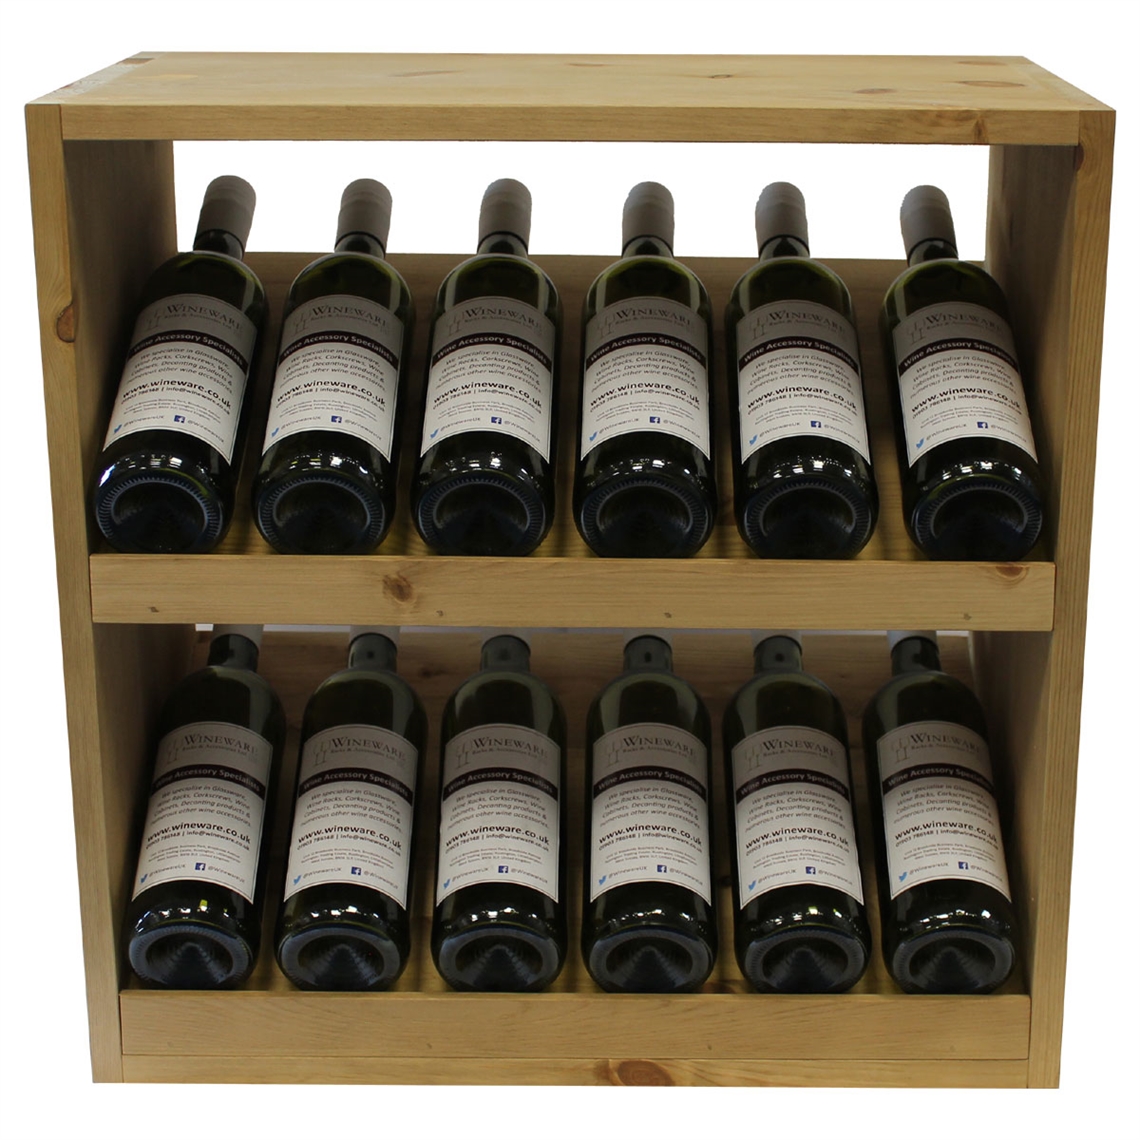 Pine Wooden Wine Rack - Display Cellar Cube - 12 Bottles - 298mm Deep